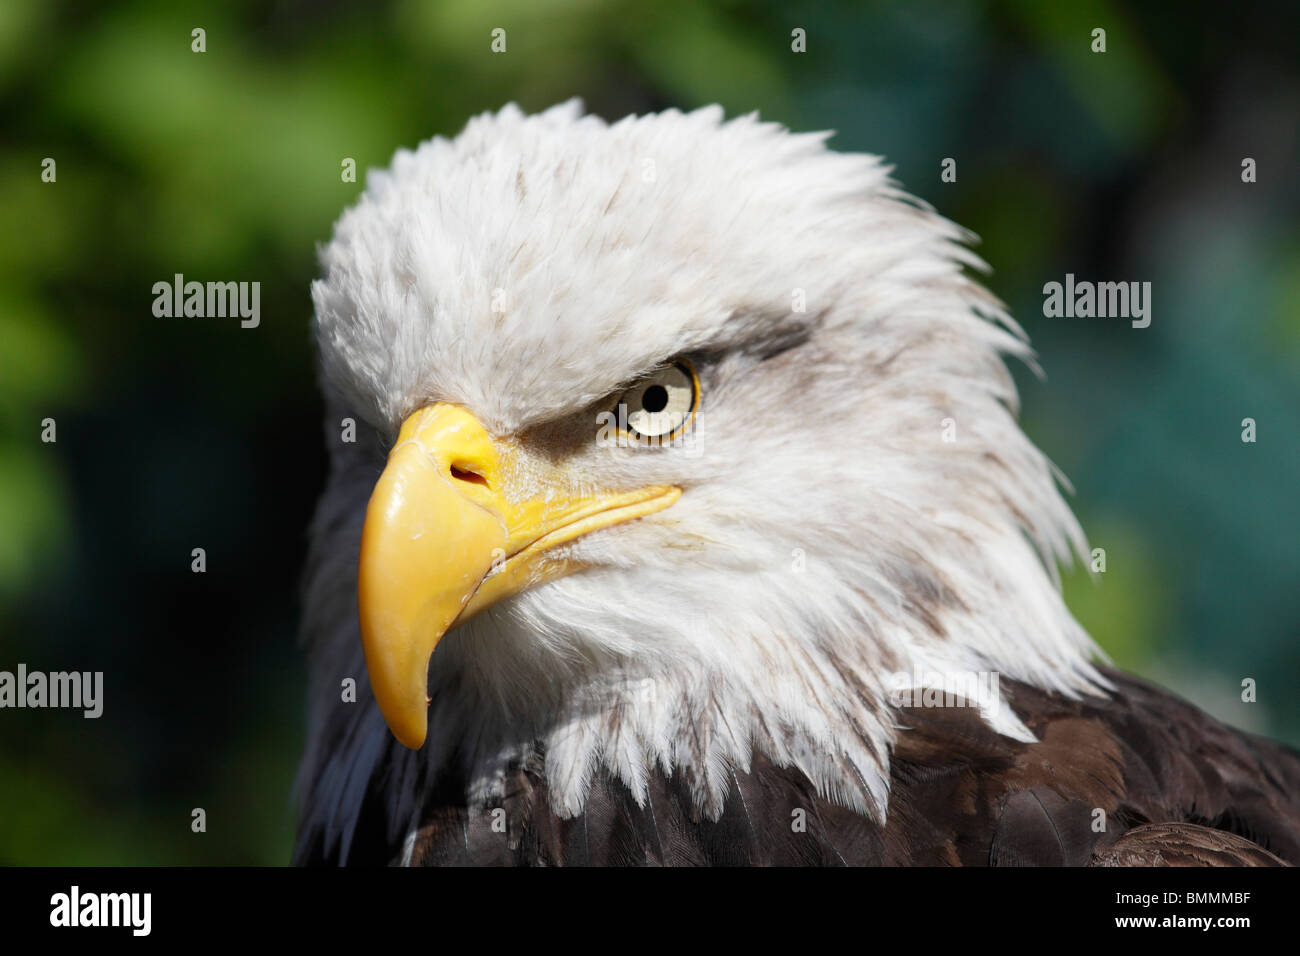 Magnificent Bald Eagle in Ketchikan, Alaska Stock Photo